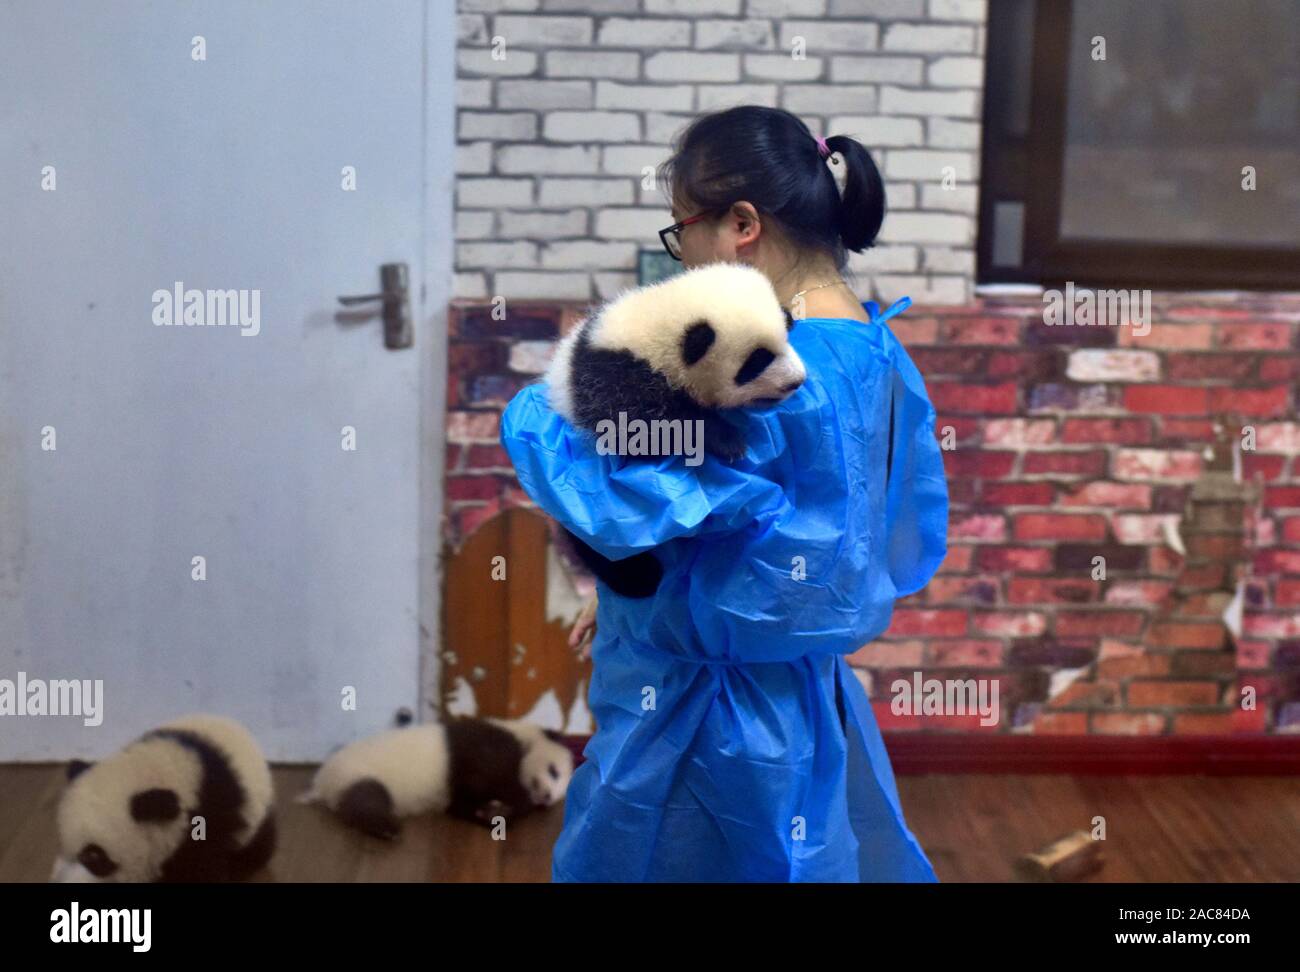 Panda bear in arms of caretaker at Chengdu Panda Breeding Center, China Stock Photo